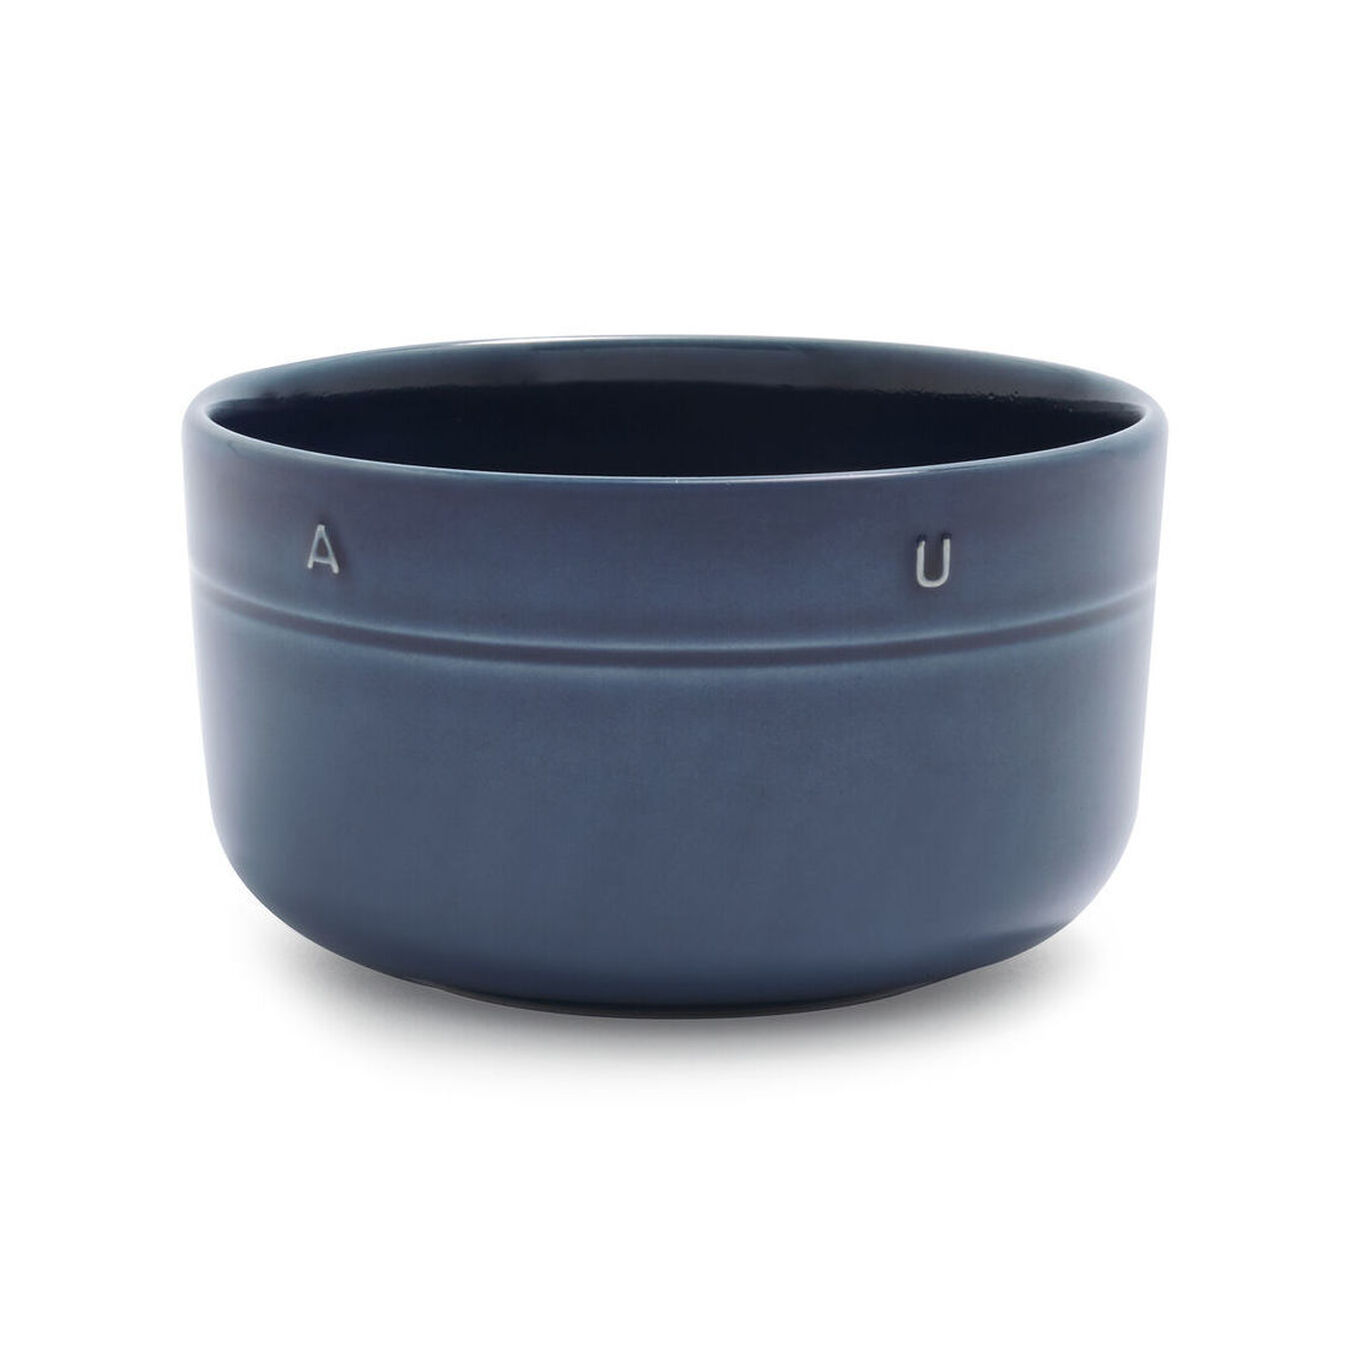 Serving set, 12 Piece | dark-blue | ceramic,,large 2